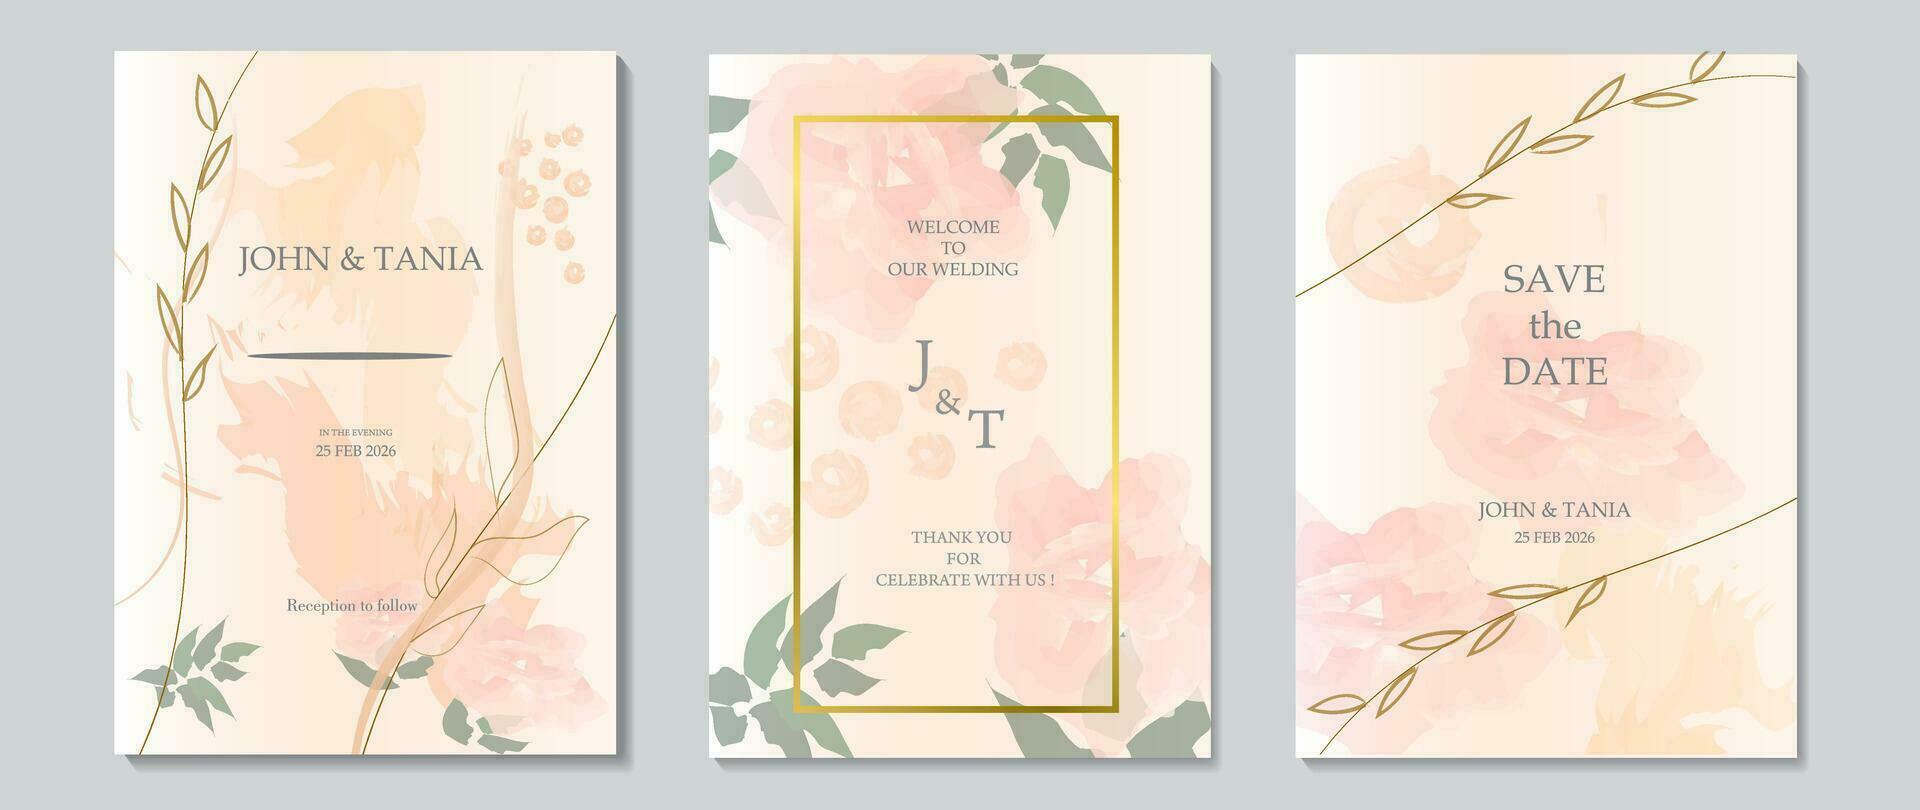 Casamento convite cartão Projeto abstrato floral vetor modelo